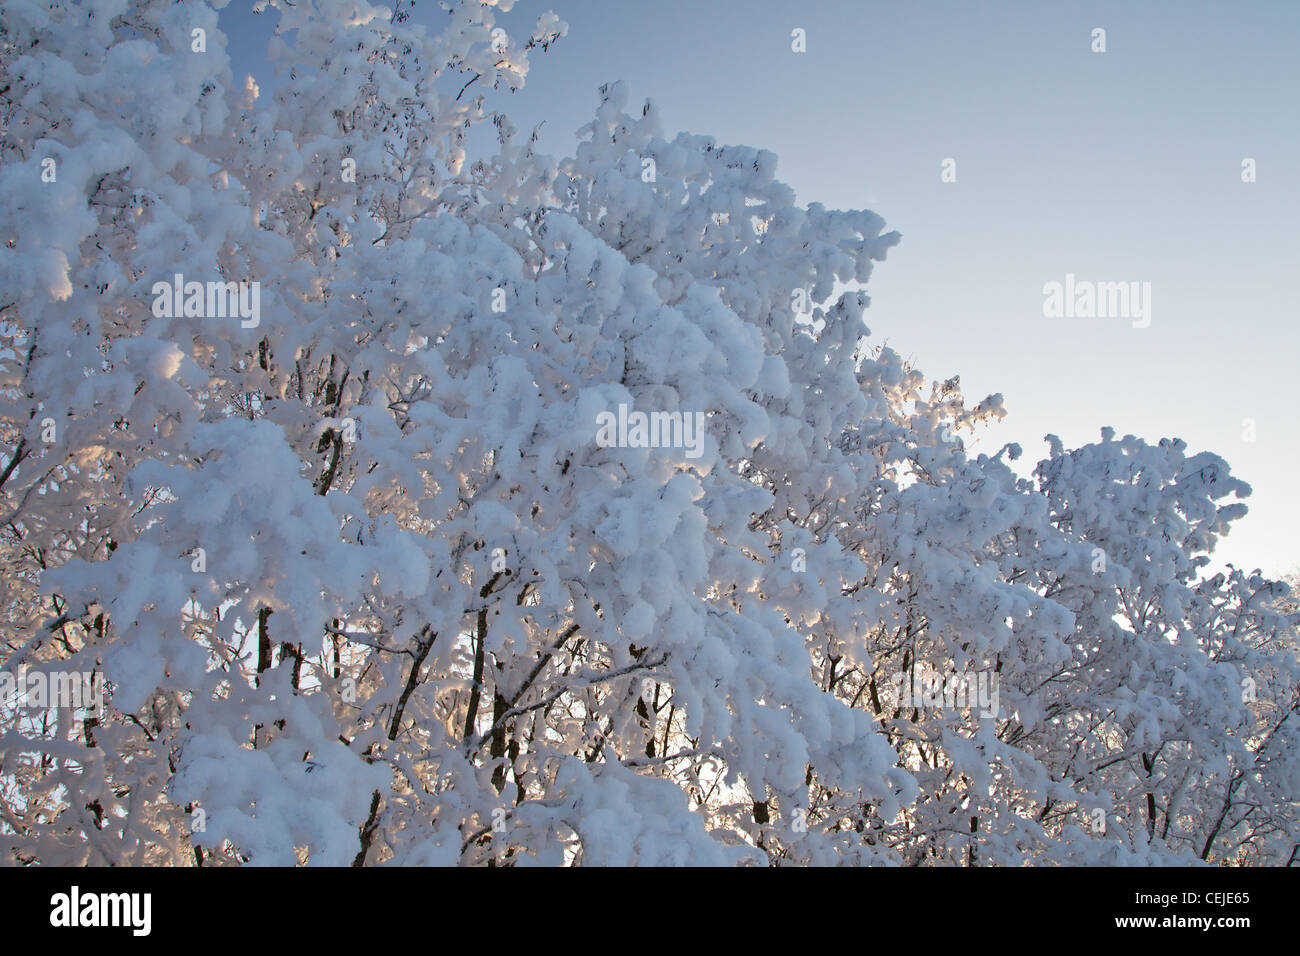 winterfoto, winter photo Stock Photo